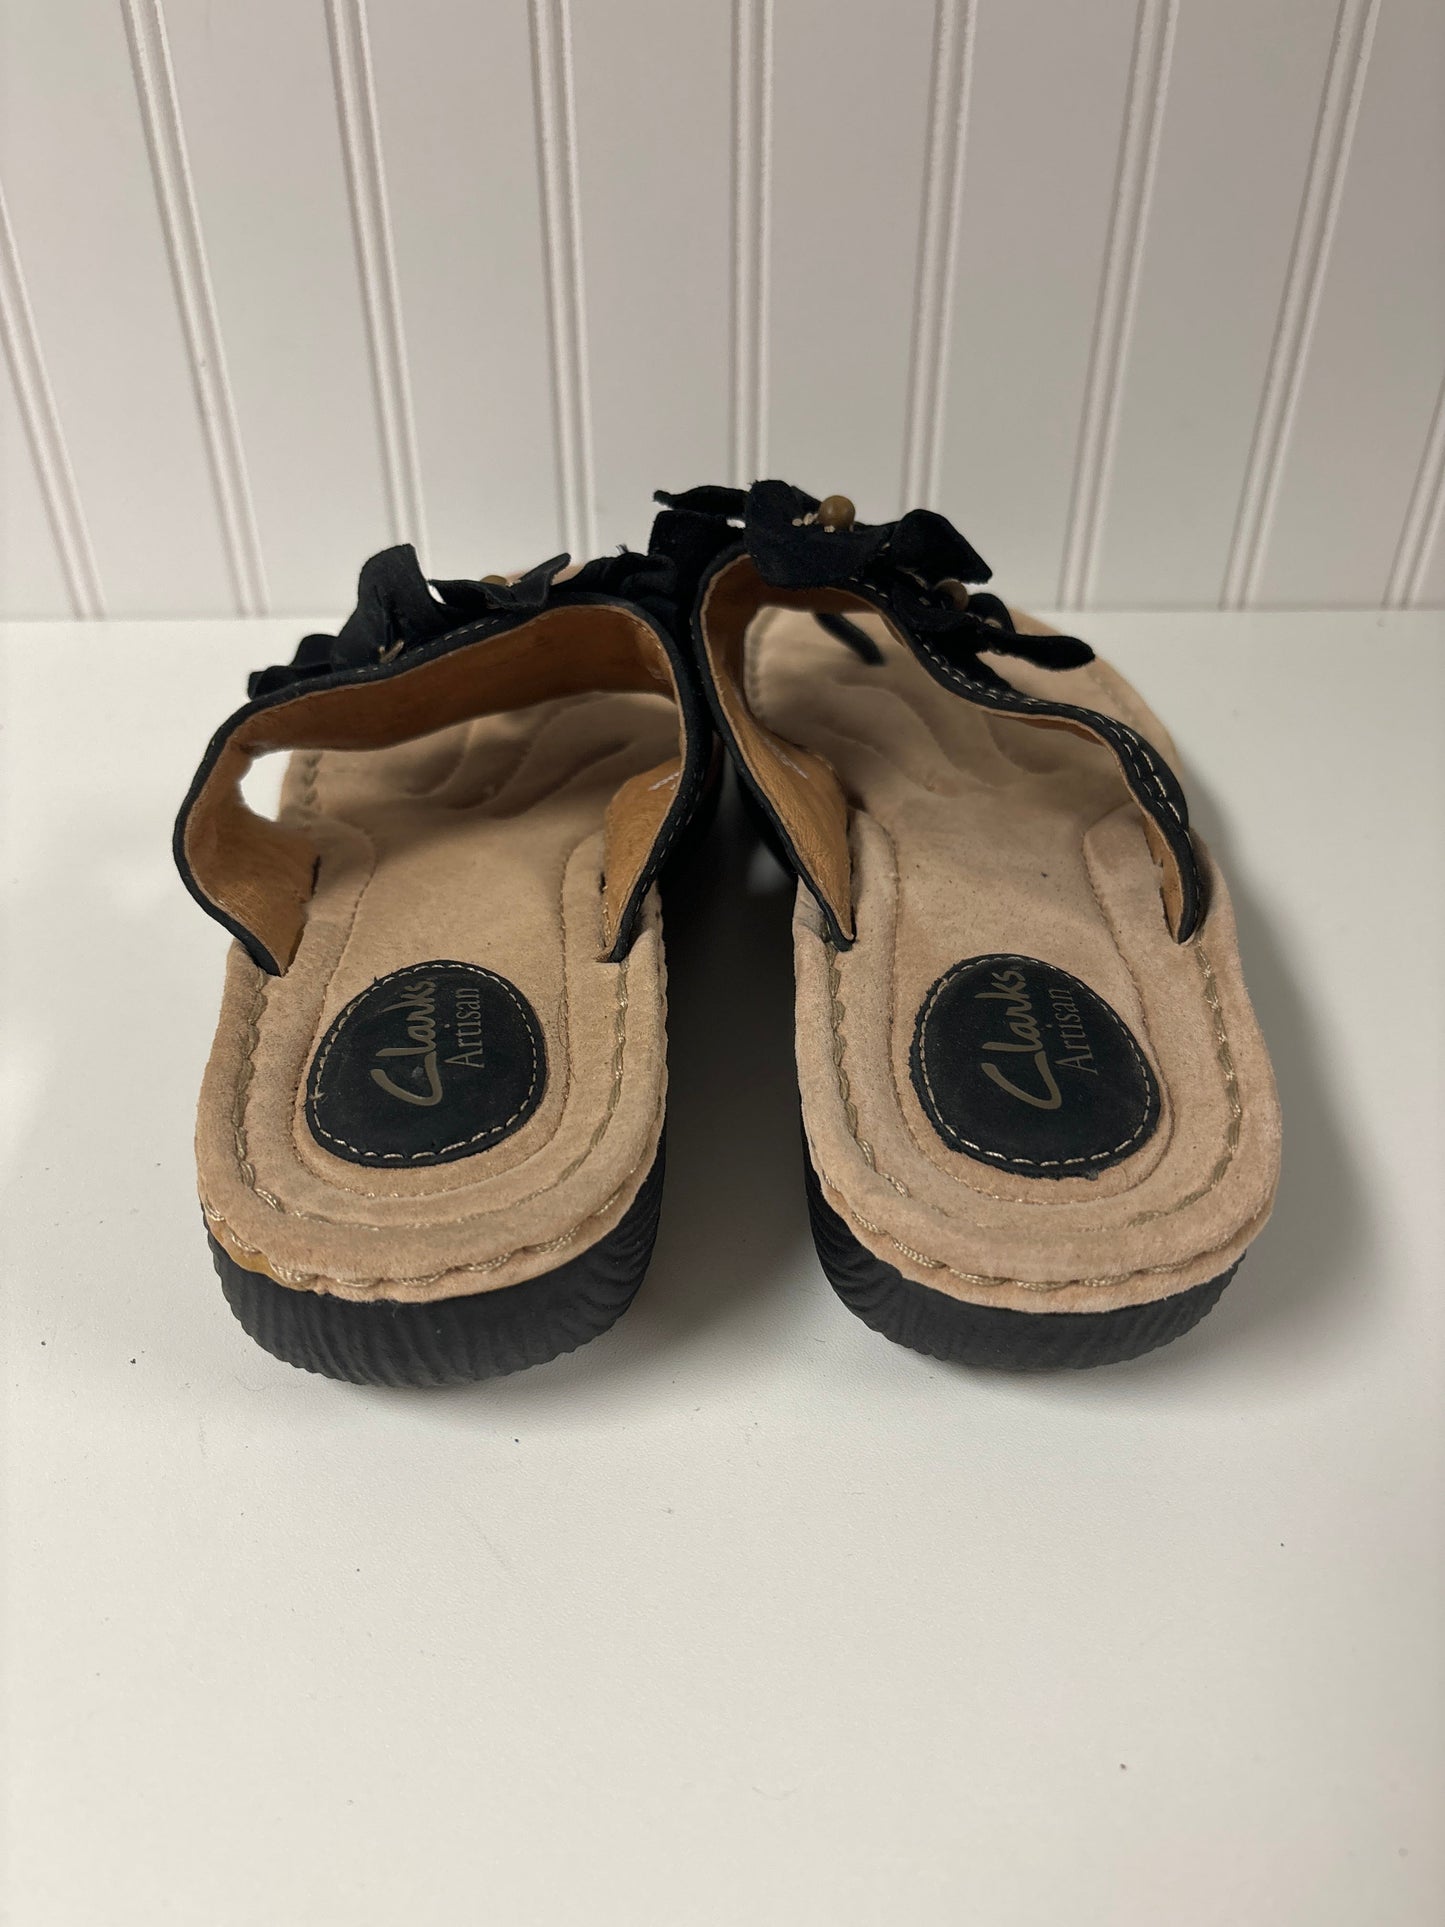 Sandals Flip Flops By Clarks  Size: 9.5